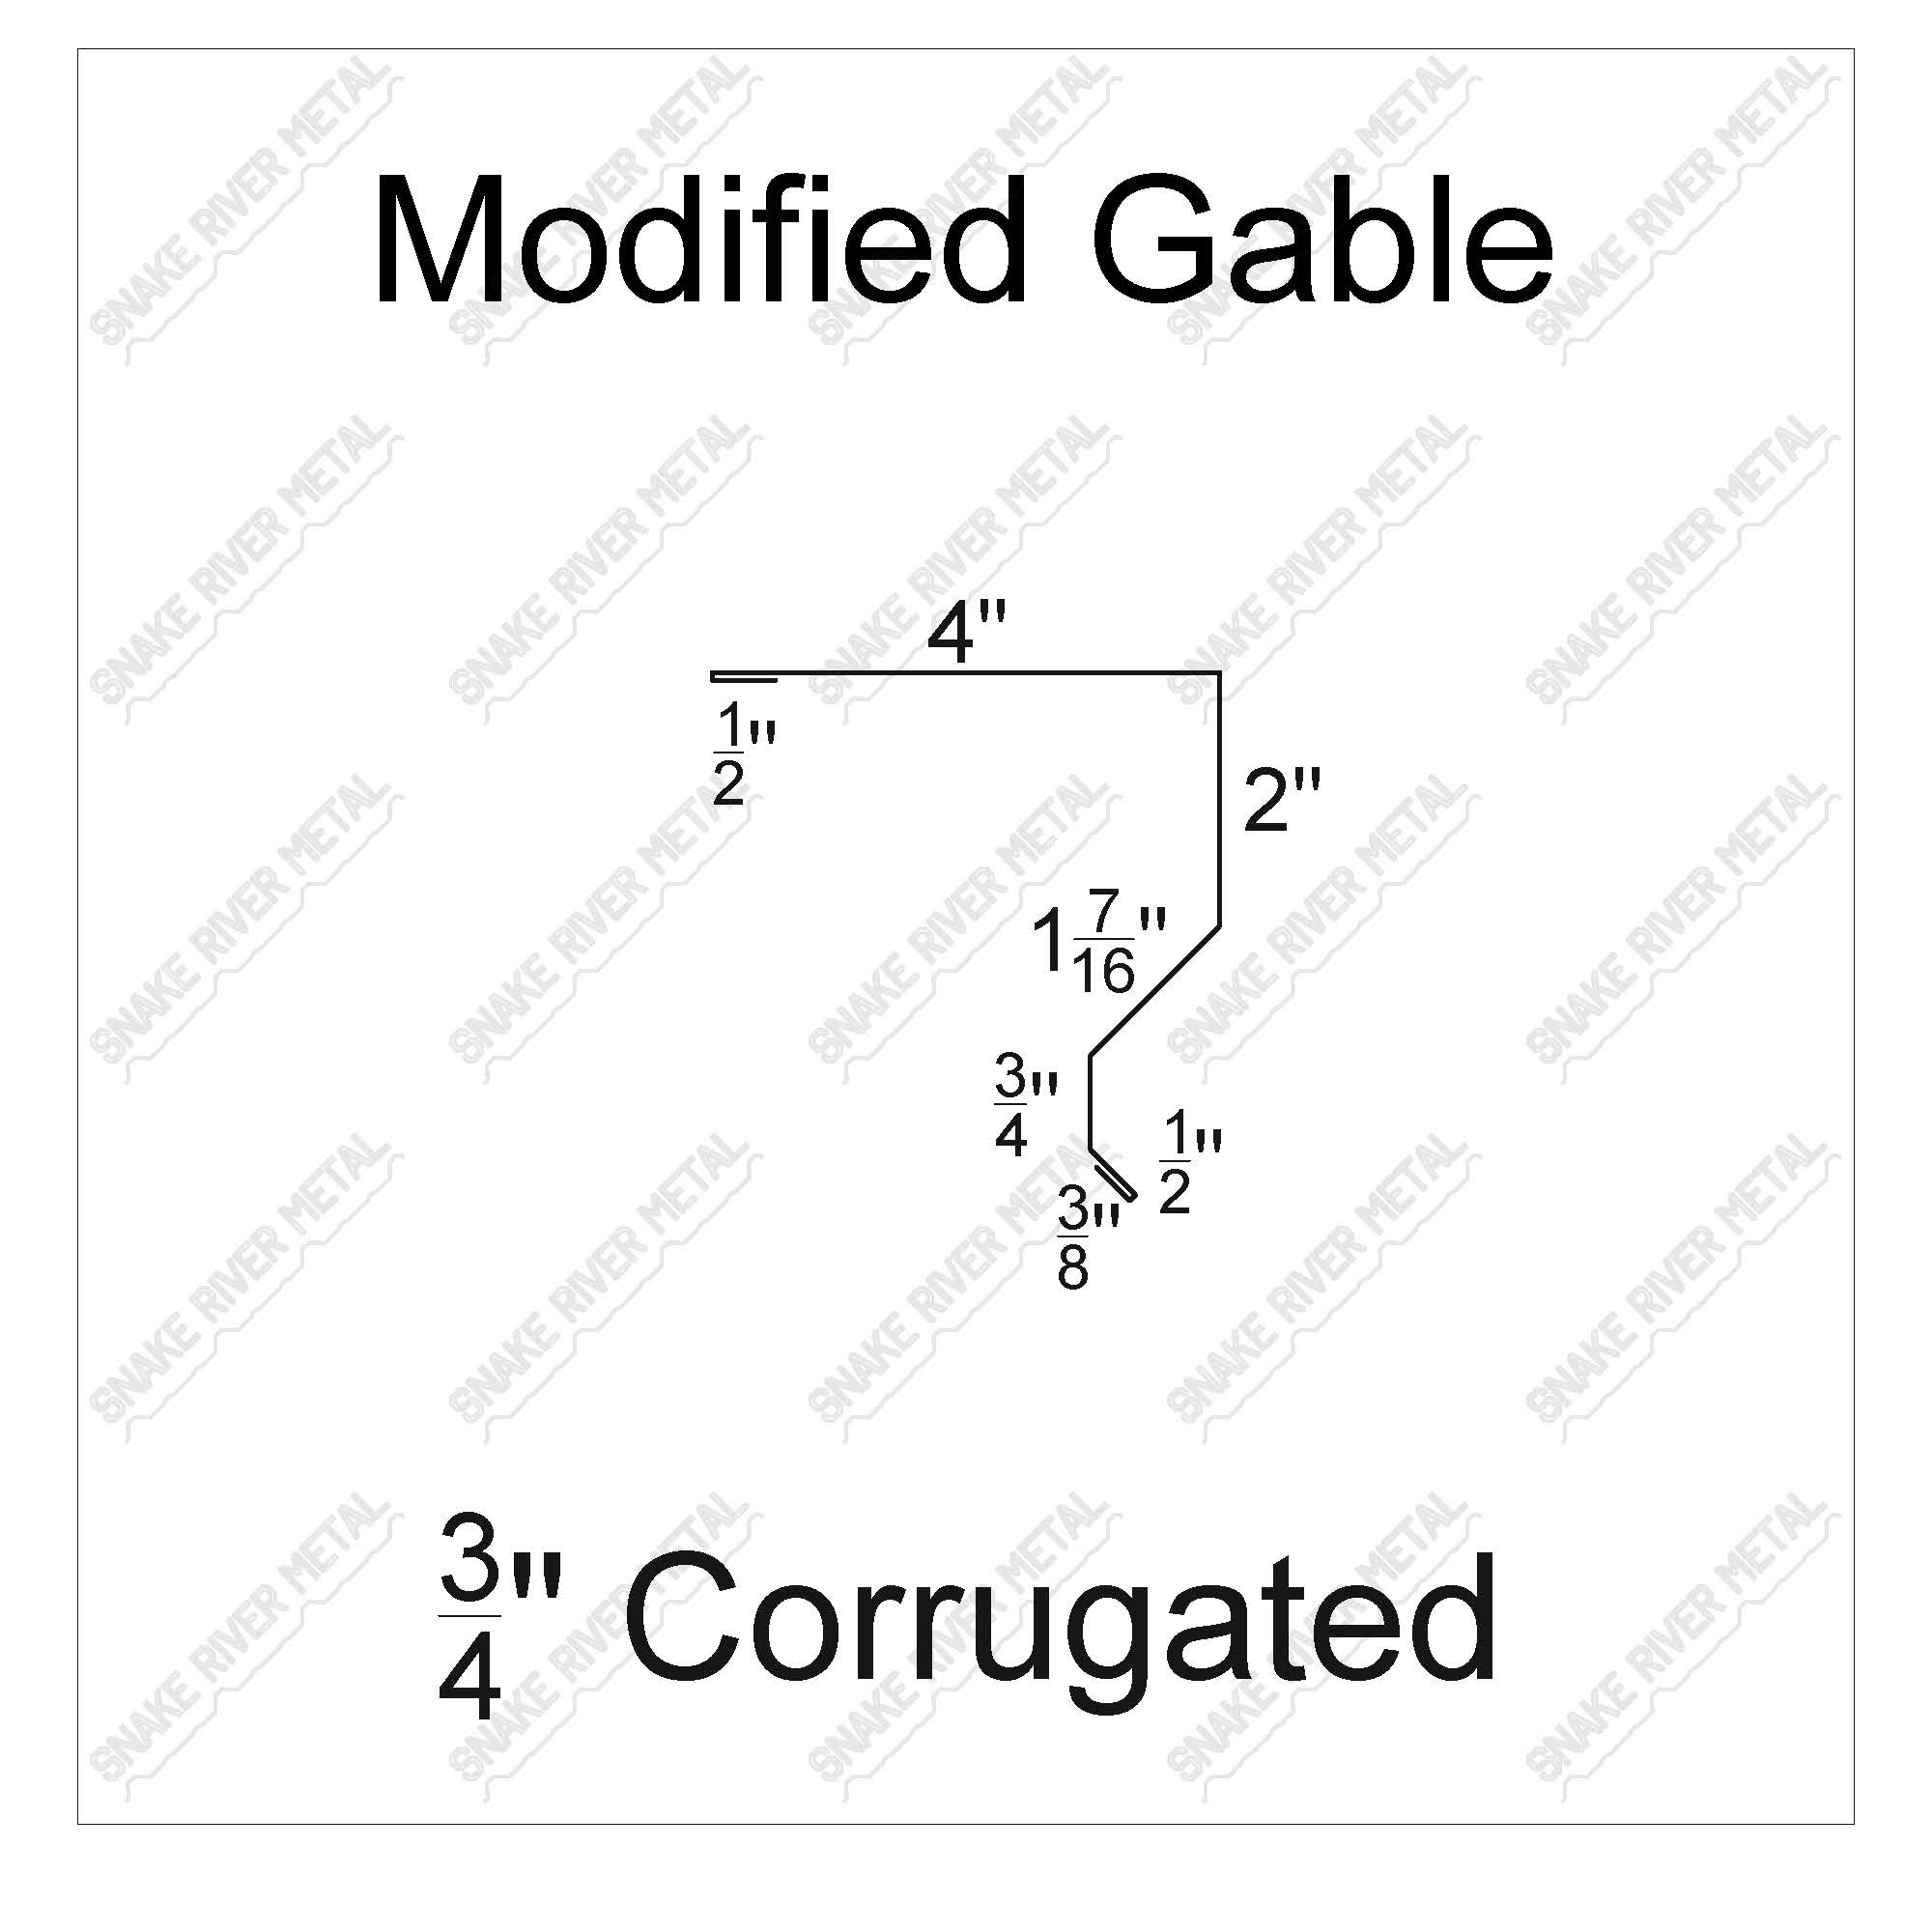 Modified Gable - Corrugated Trim